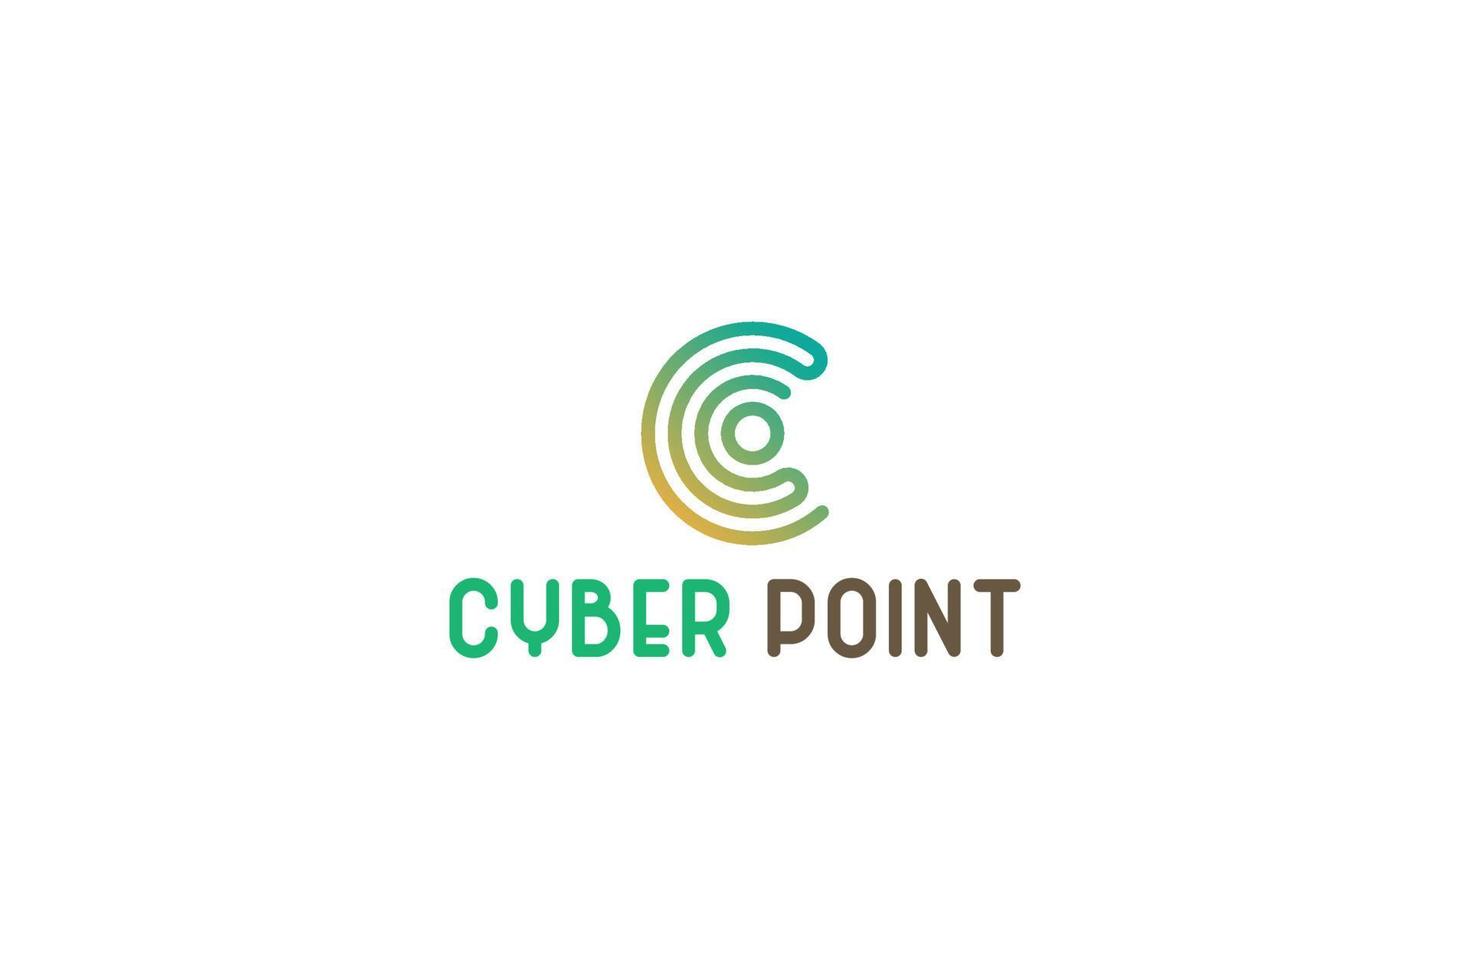 Buchstabe c Cyber Point grünes Logo-Design vektor